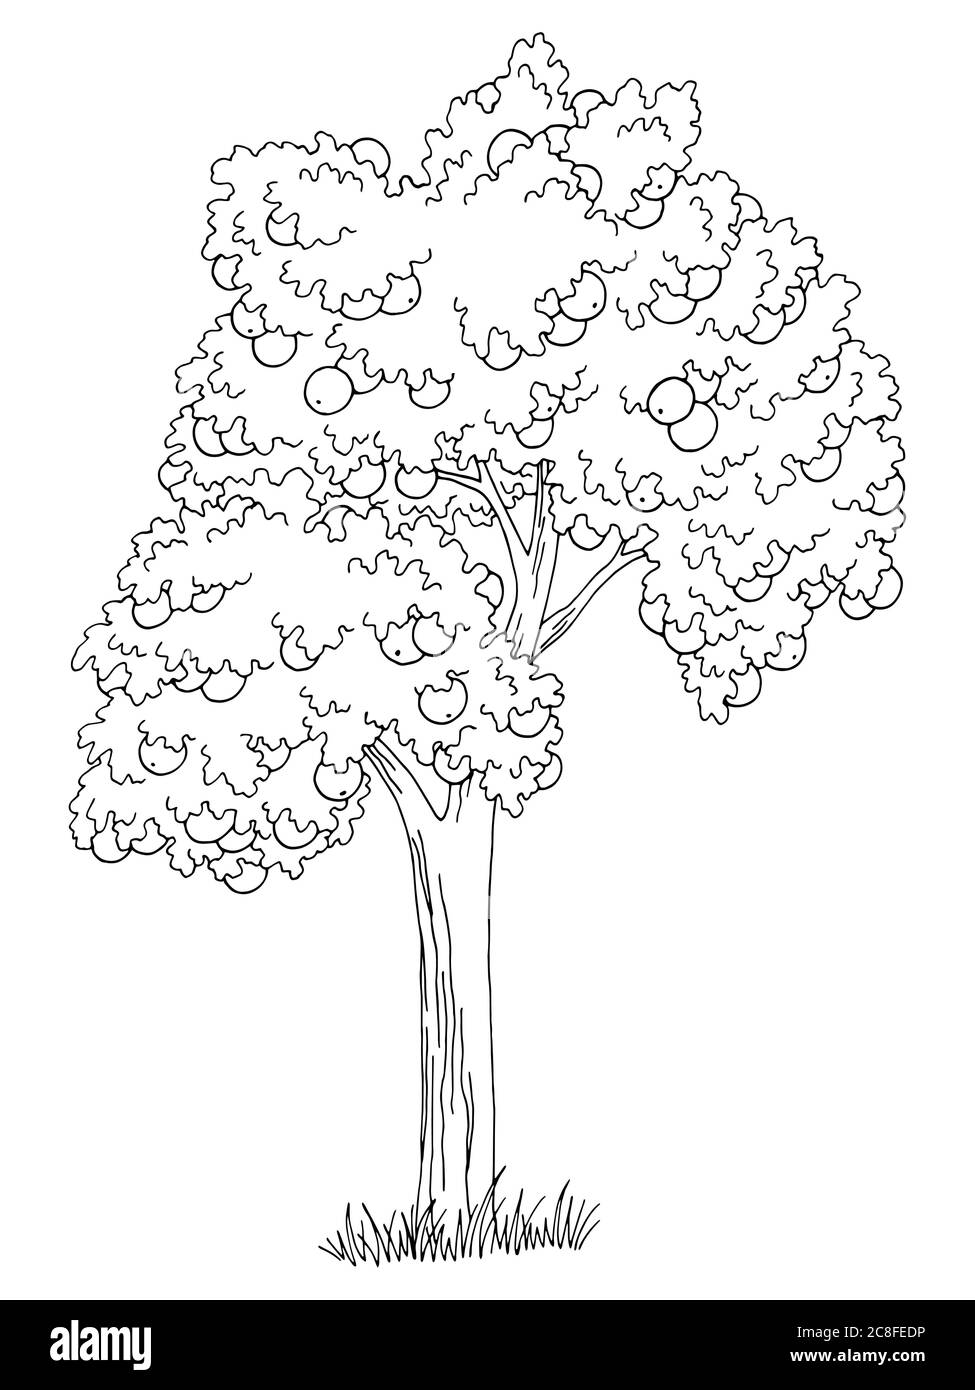 Apfelbaum Obst Grafik schwarz weiß isoliert Skizze Illustration Vektor Stock Vektor